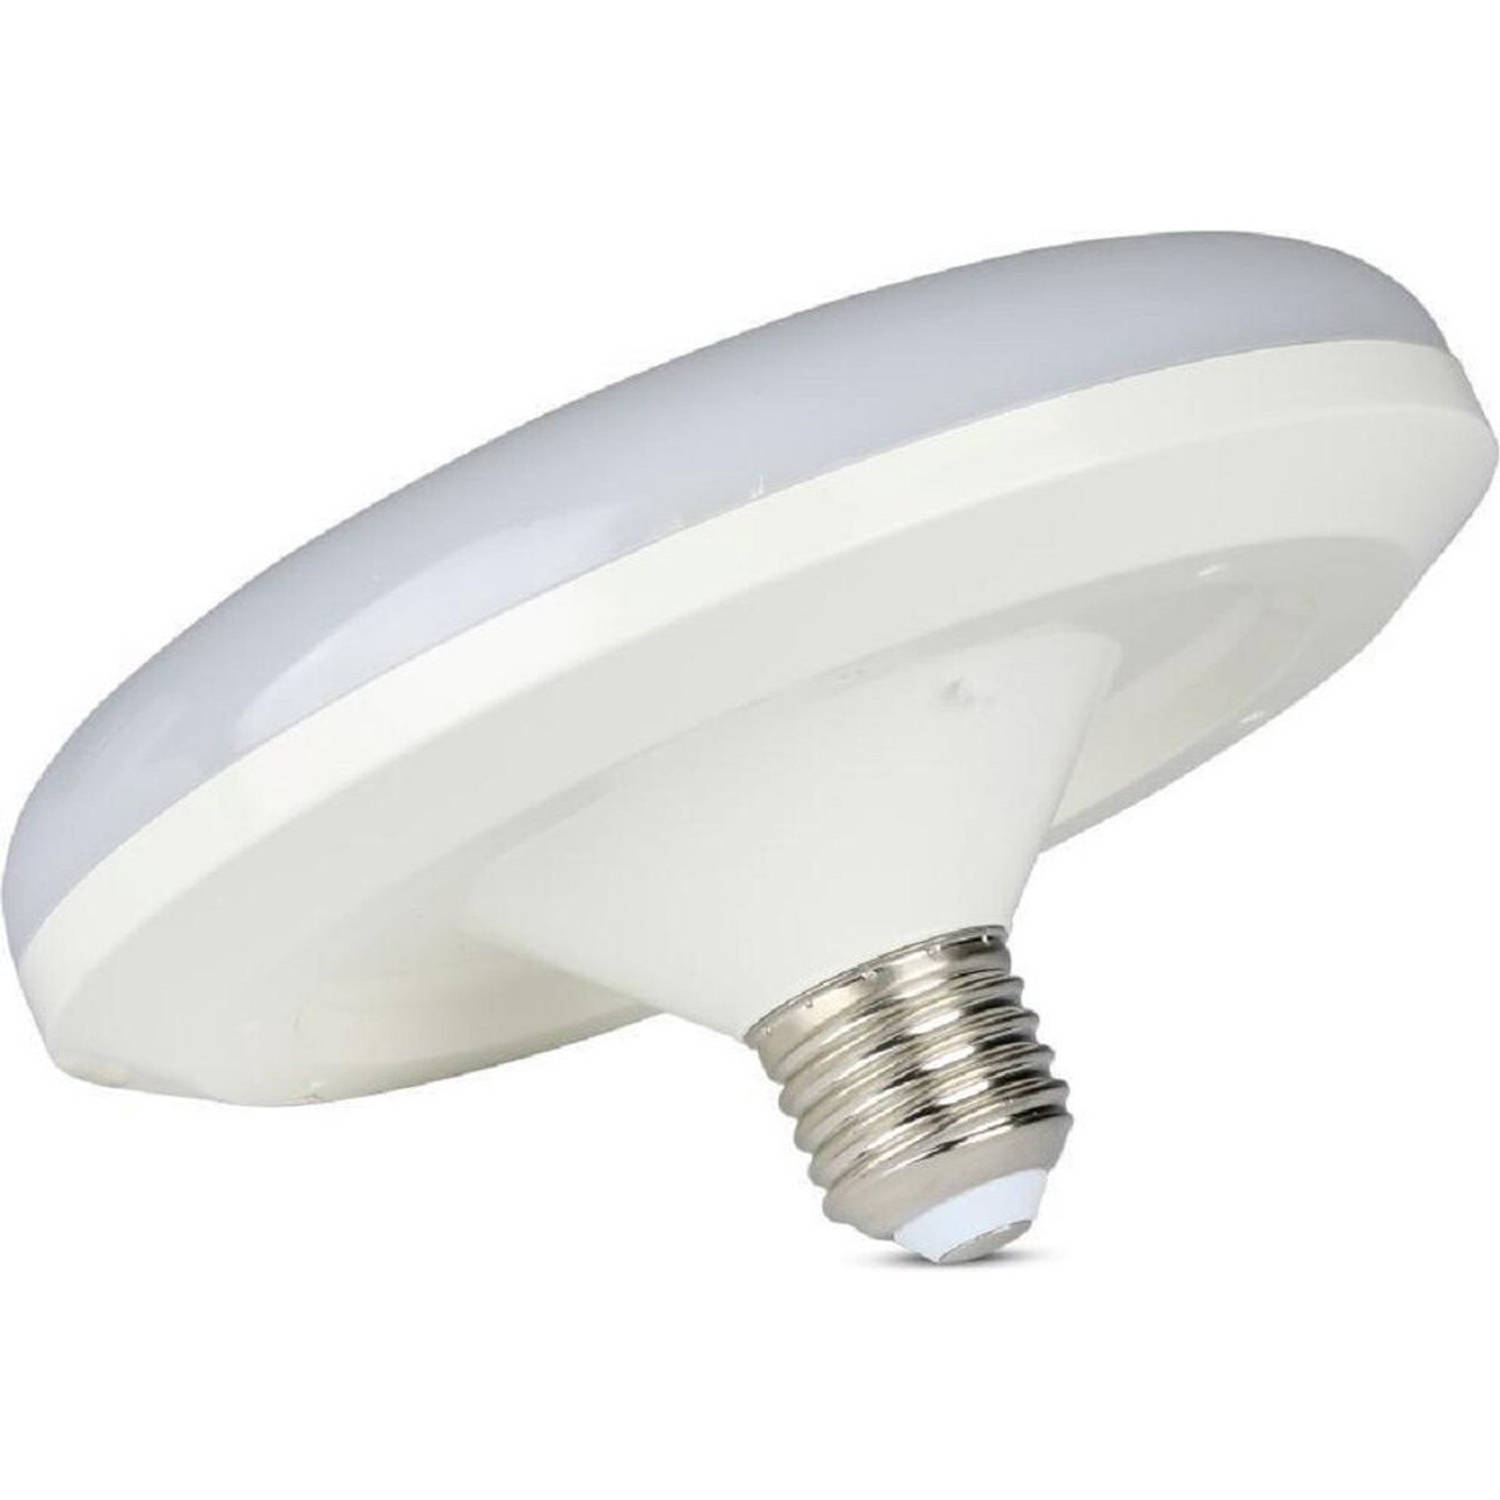 Verstelbaar Fondsen Dicteren LED Lamp - Viron Unta - UFO F250 - E27 Fitting - 36W - Helder/Koud Wit  6400K - Wit - SAMSUNG LEDs | Blokker